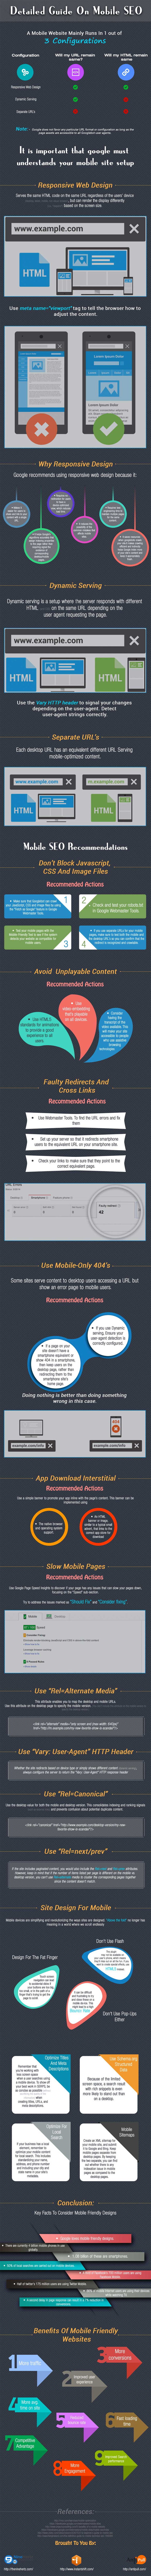 mobile-seo-infographic